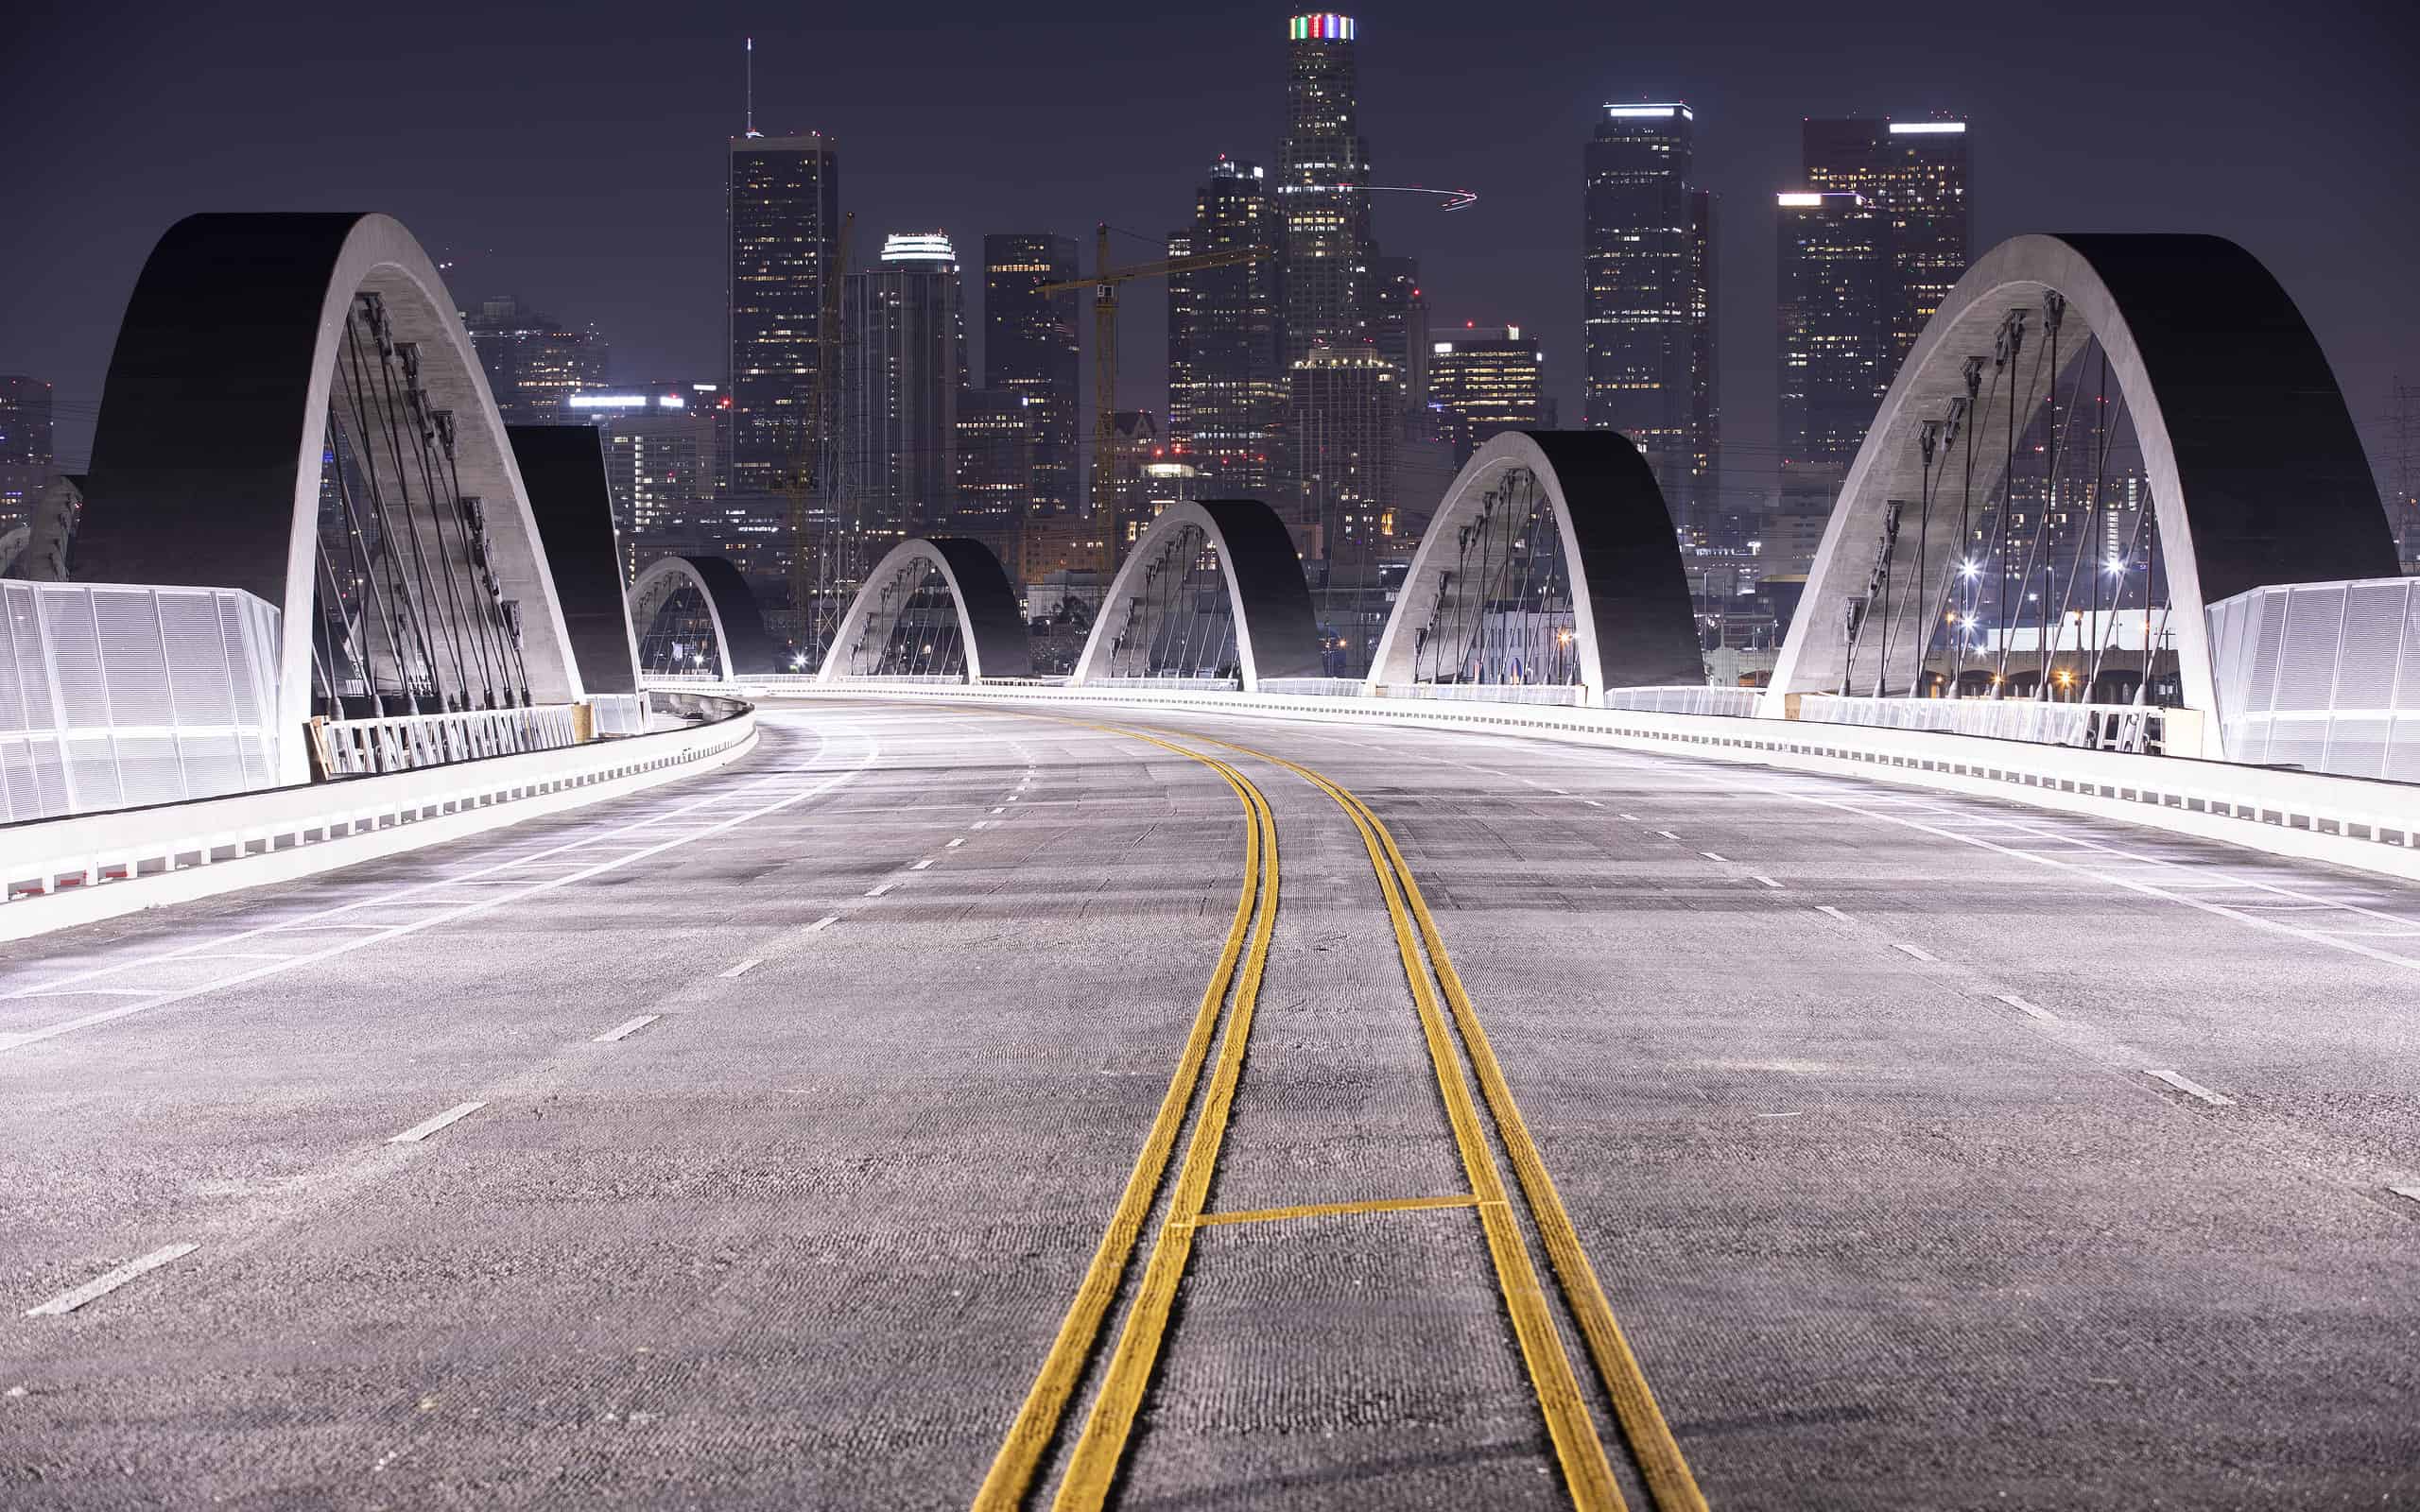 Los Angeles' 6th Street Bridge